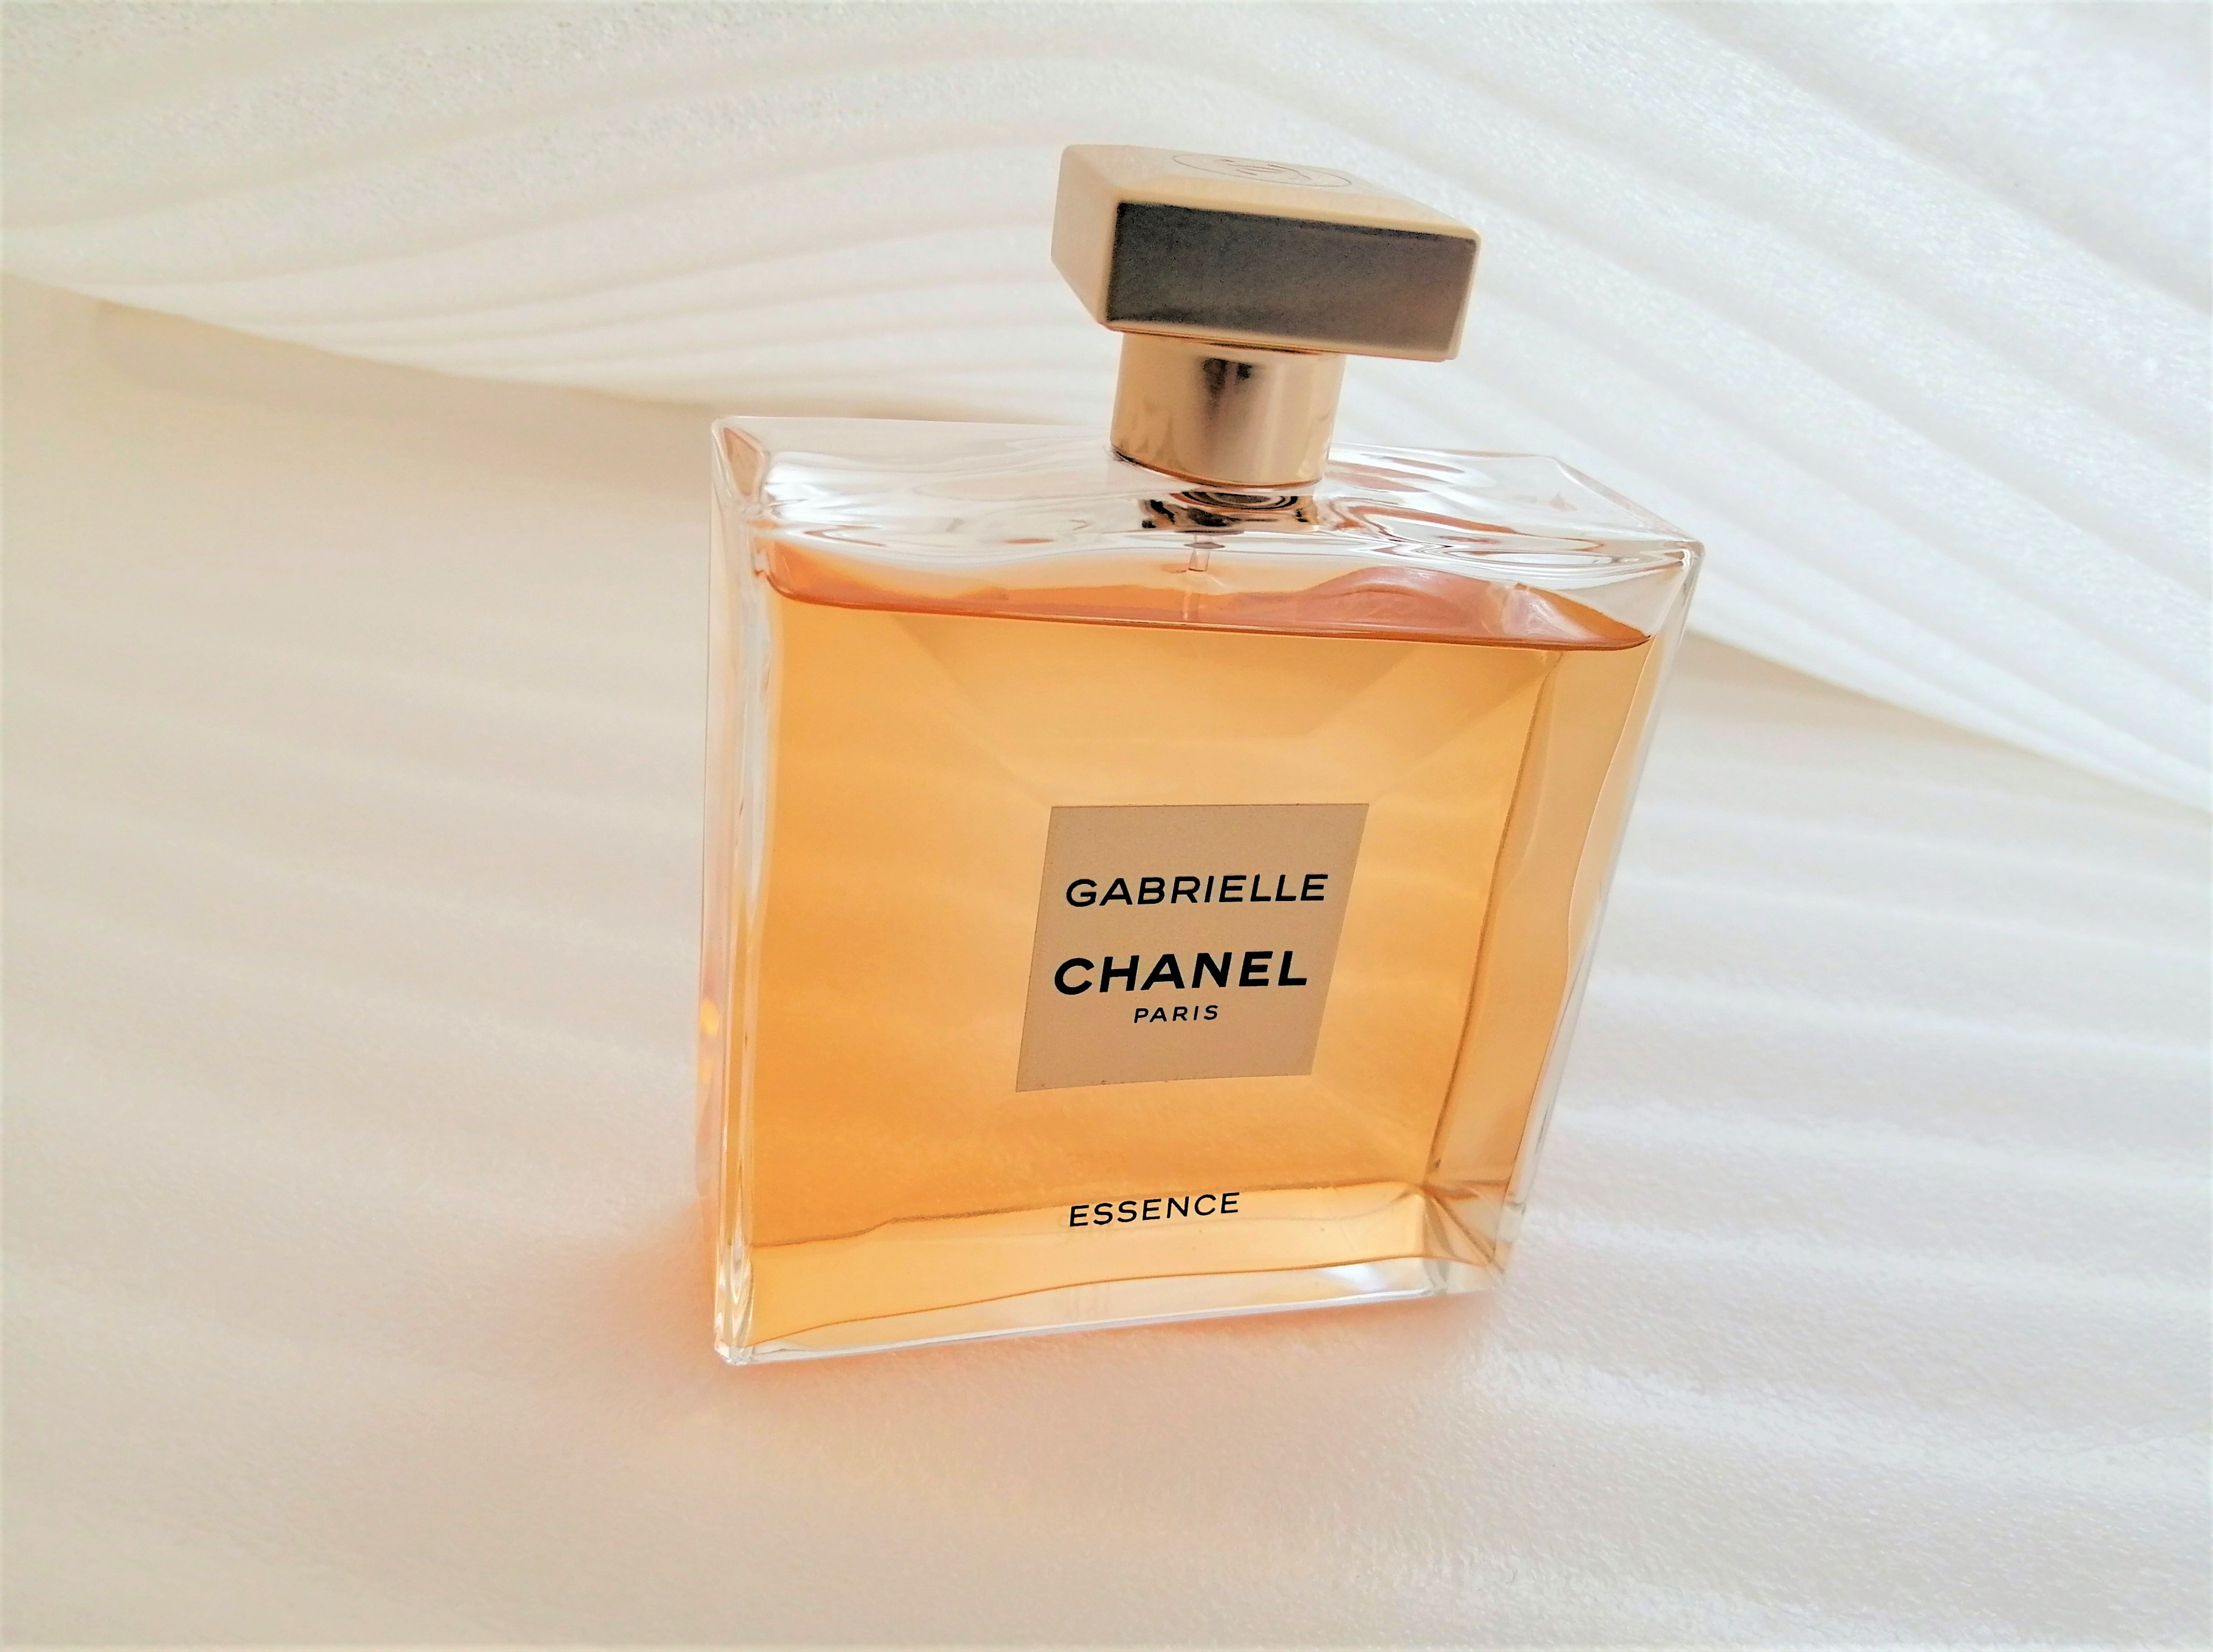 Home - Oracle Fox  Perfume design, Still life photography, Still